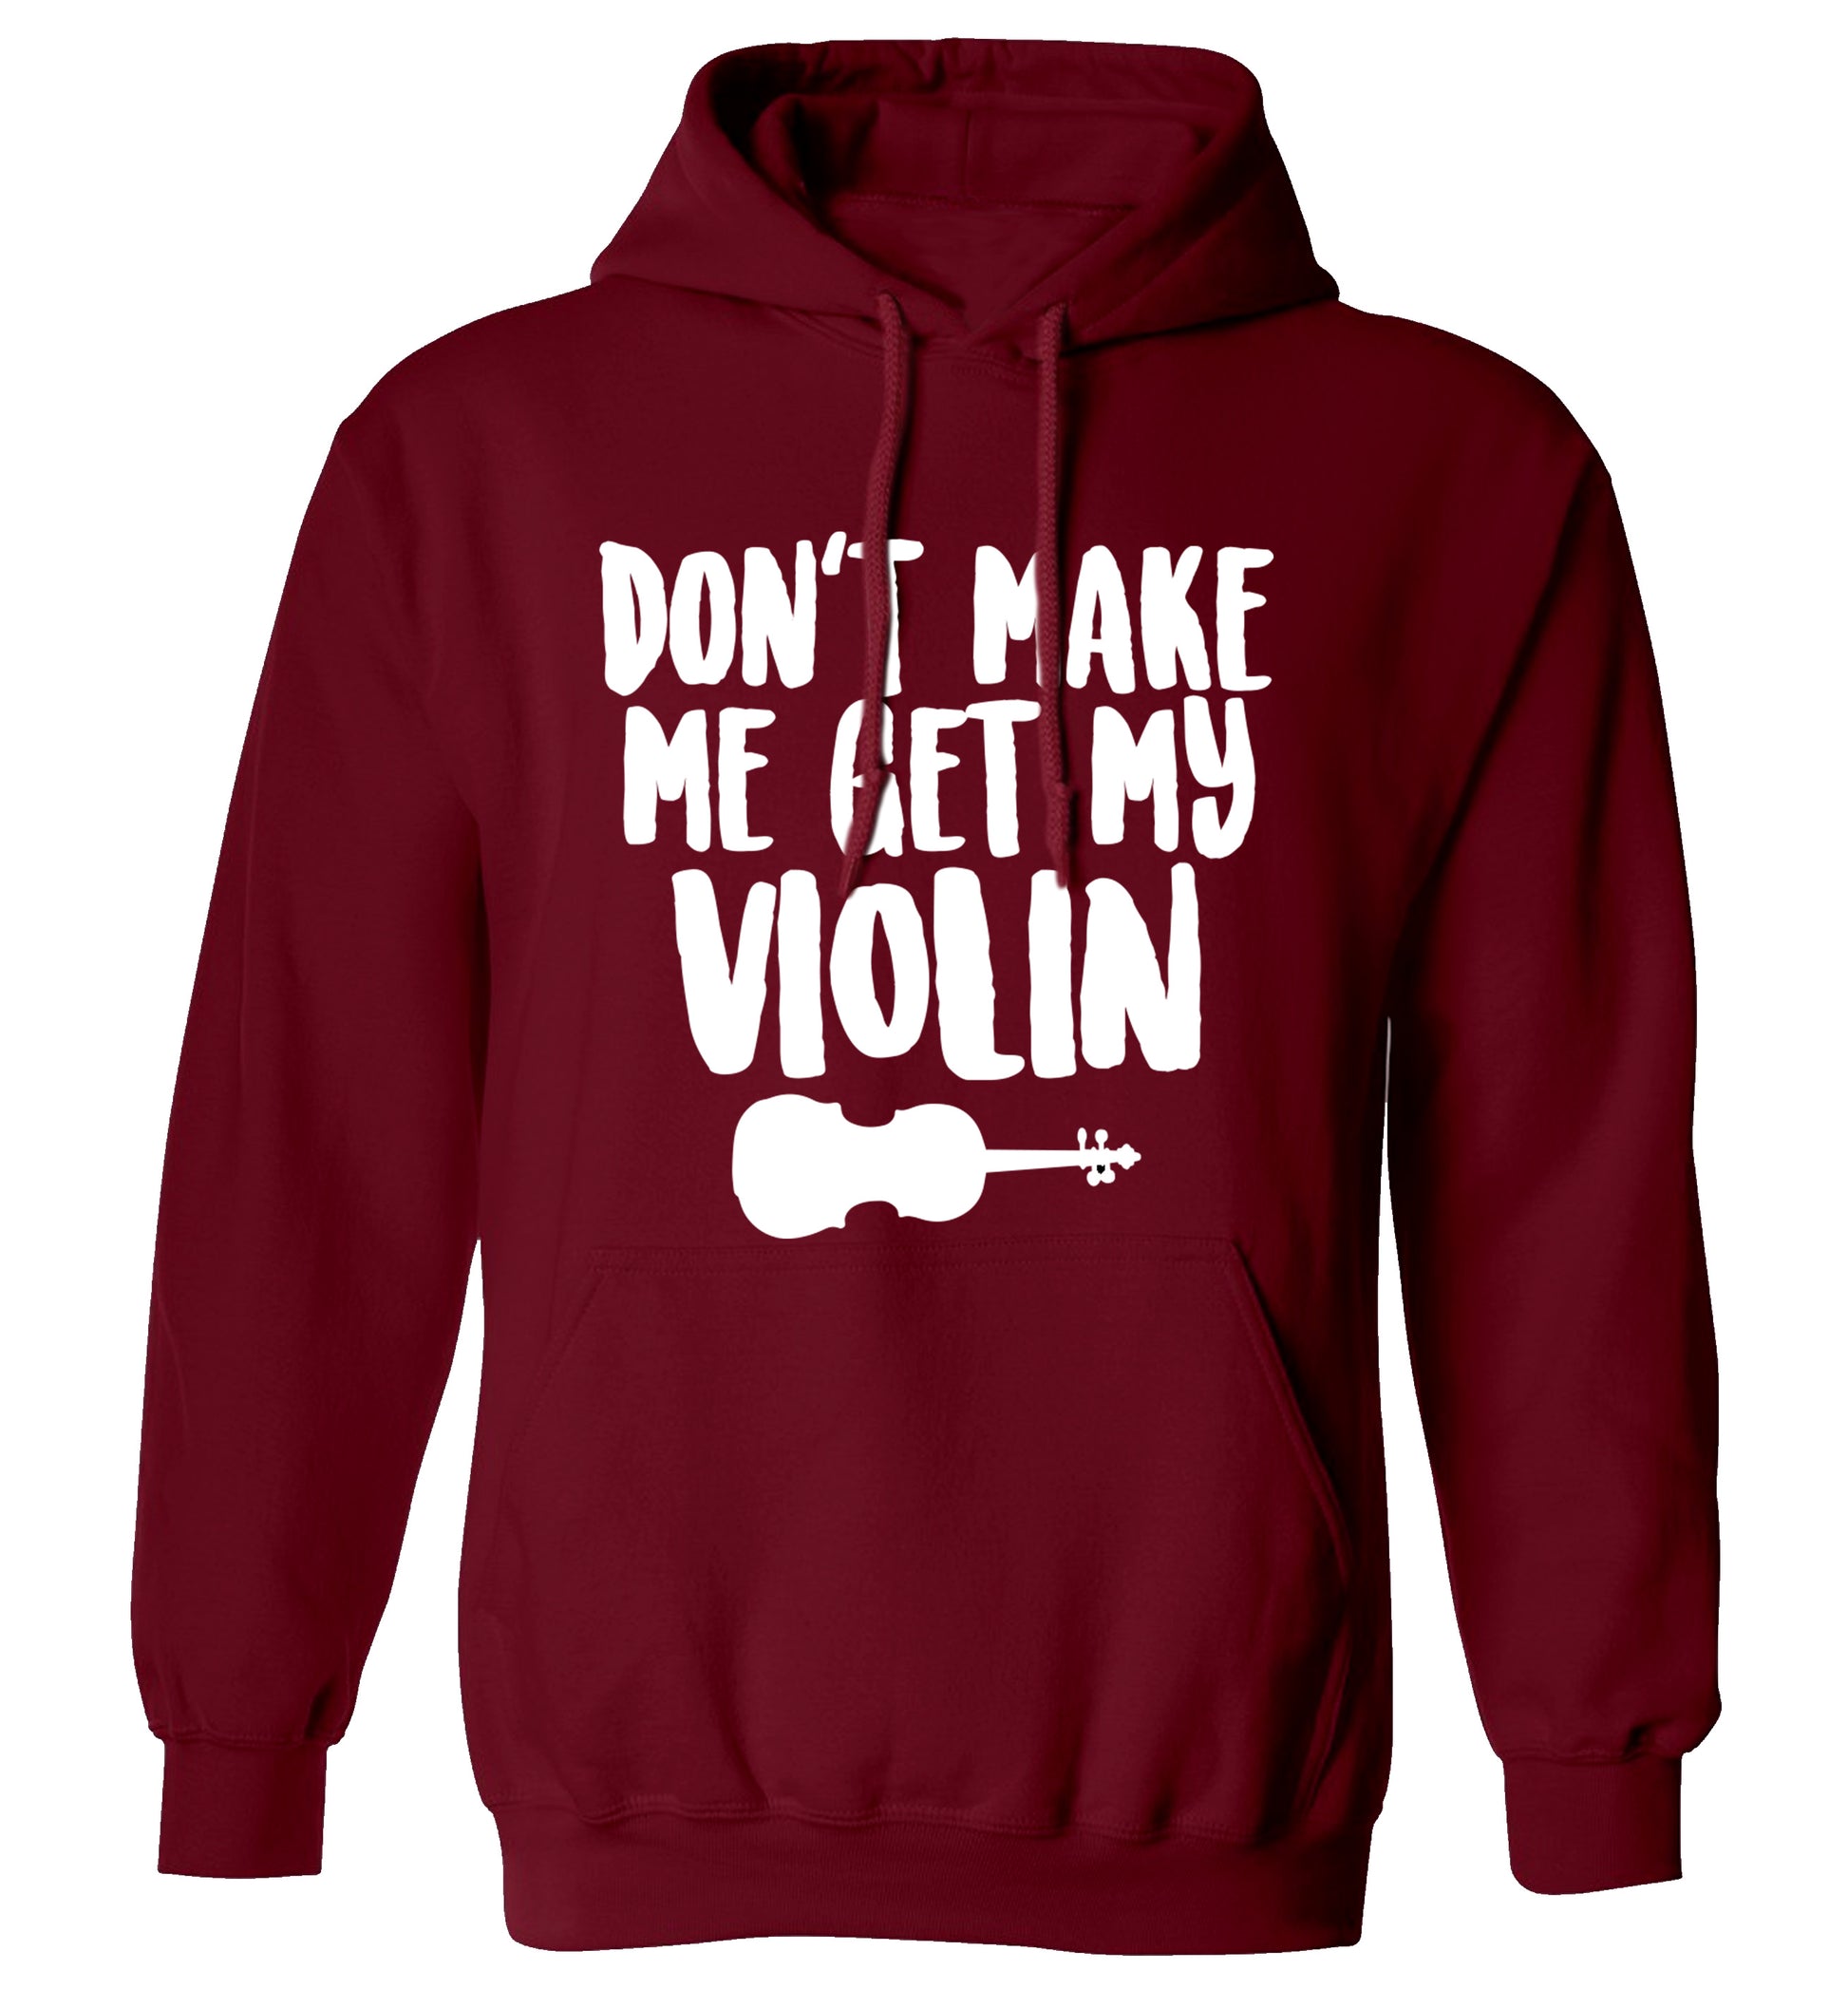 Don't make me get my violin adults unisex maroon hoodie 2XL